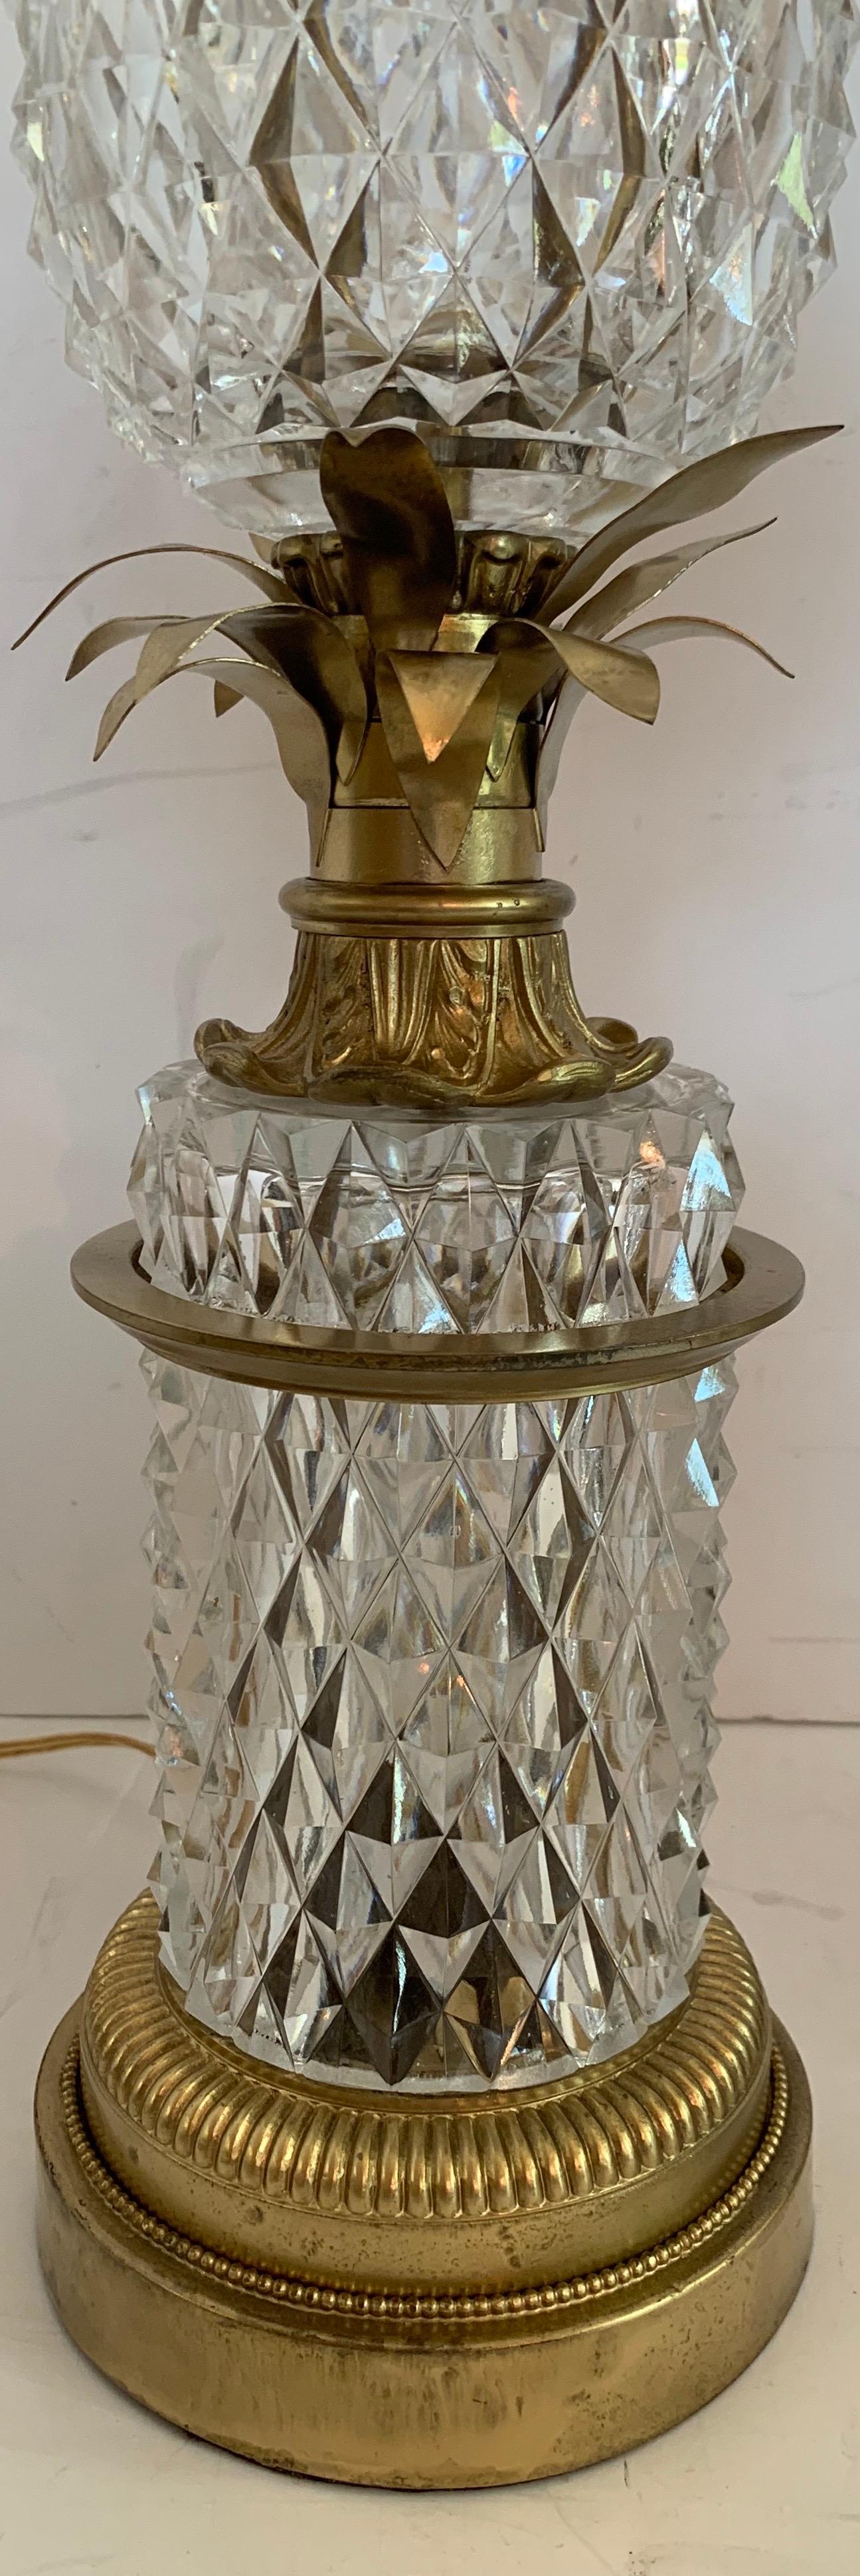 cataratas crystal lamp